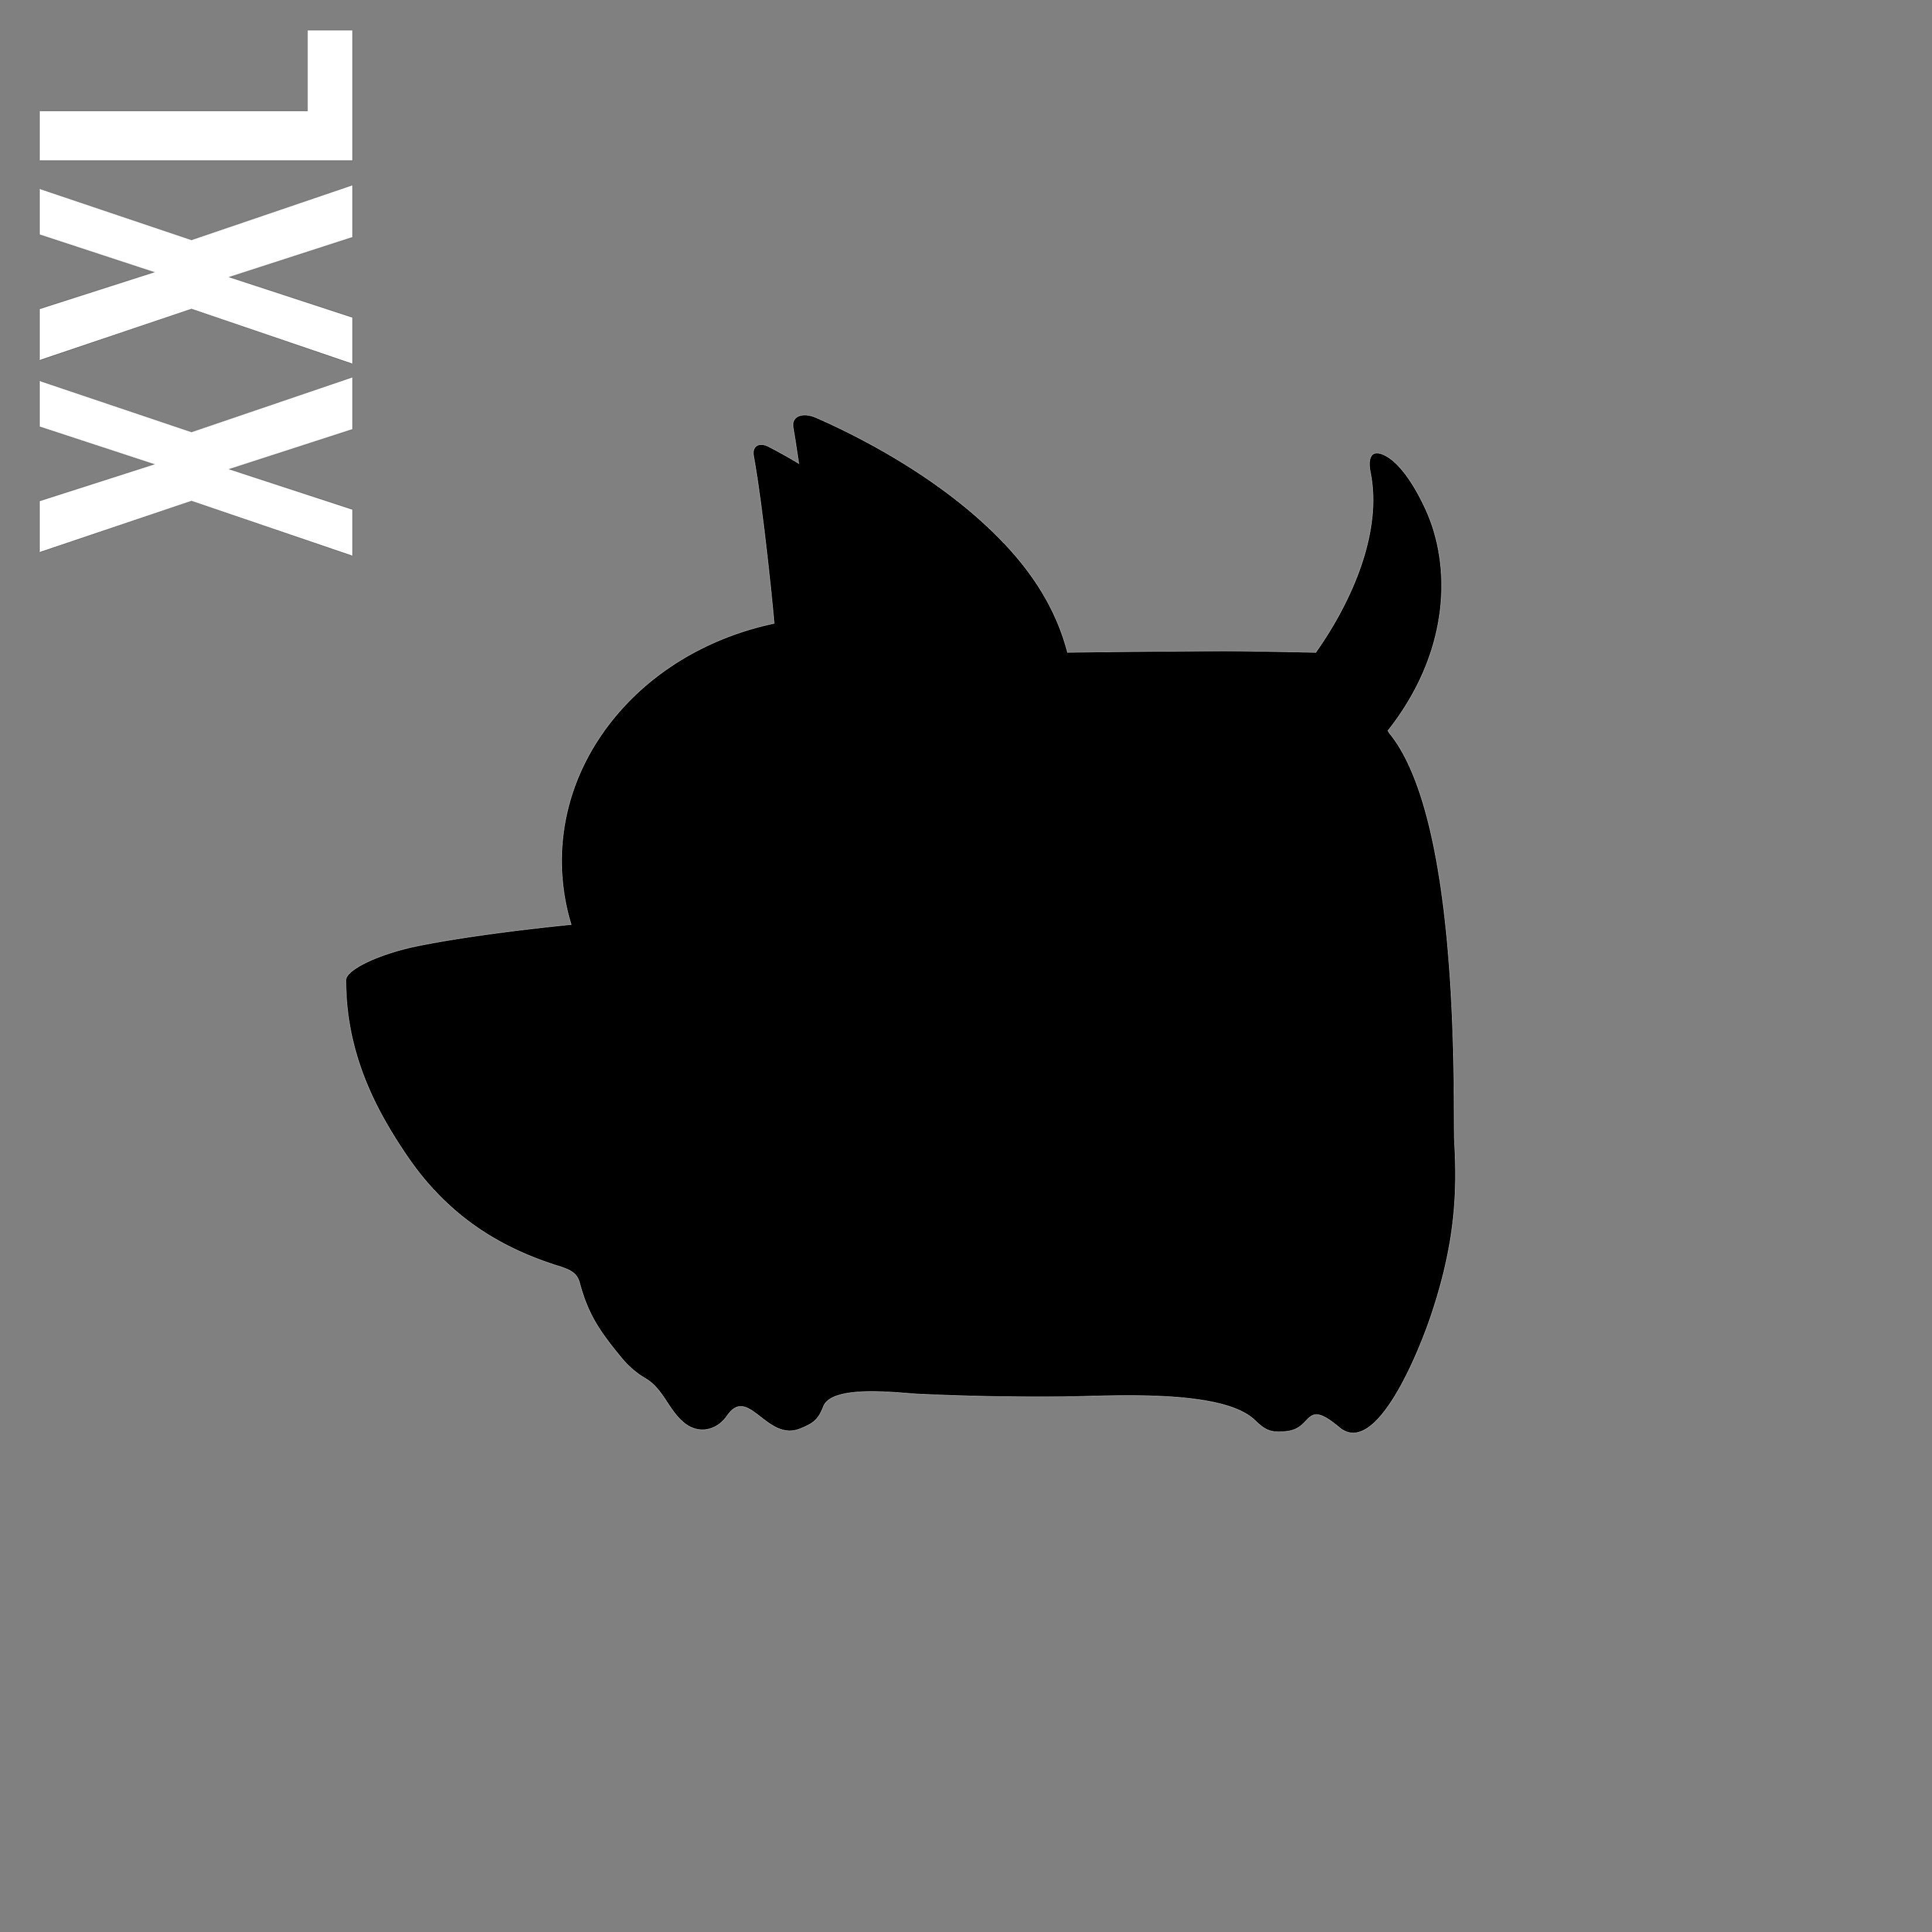 Постер альбома Xxl